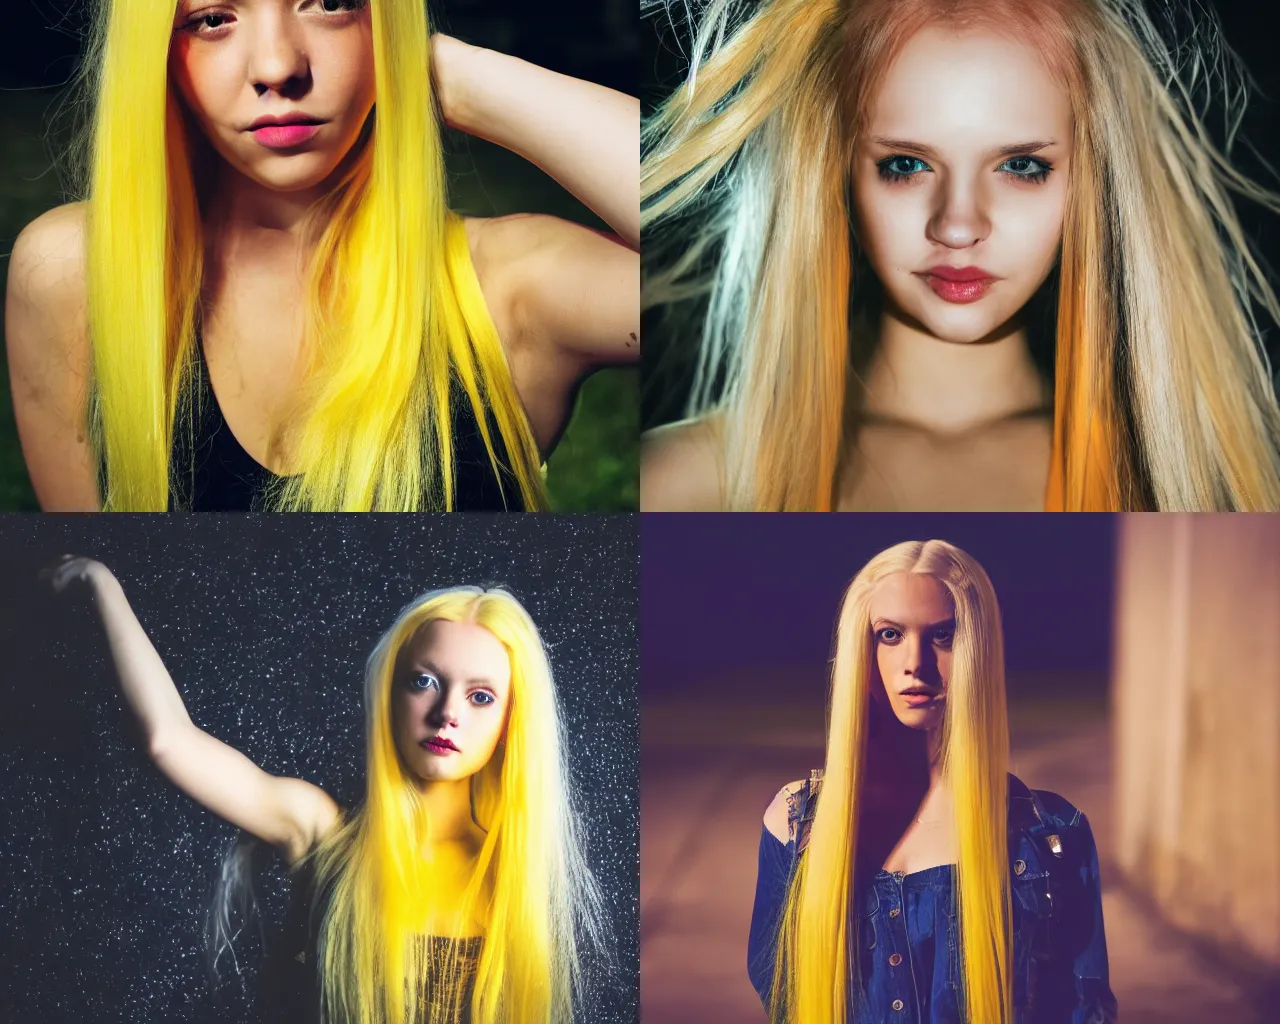 Prompt: girl with long yellow hair wearing a crop top, nighttime, dslr 3 5 mm, beautiful face, detailed, award winning